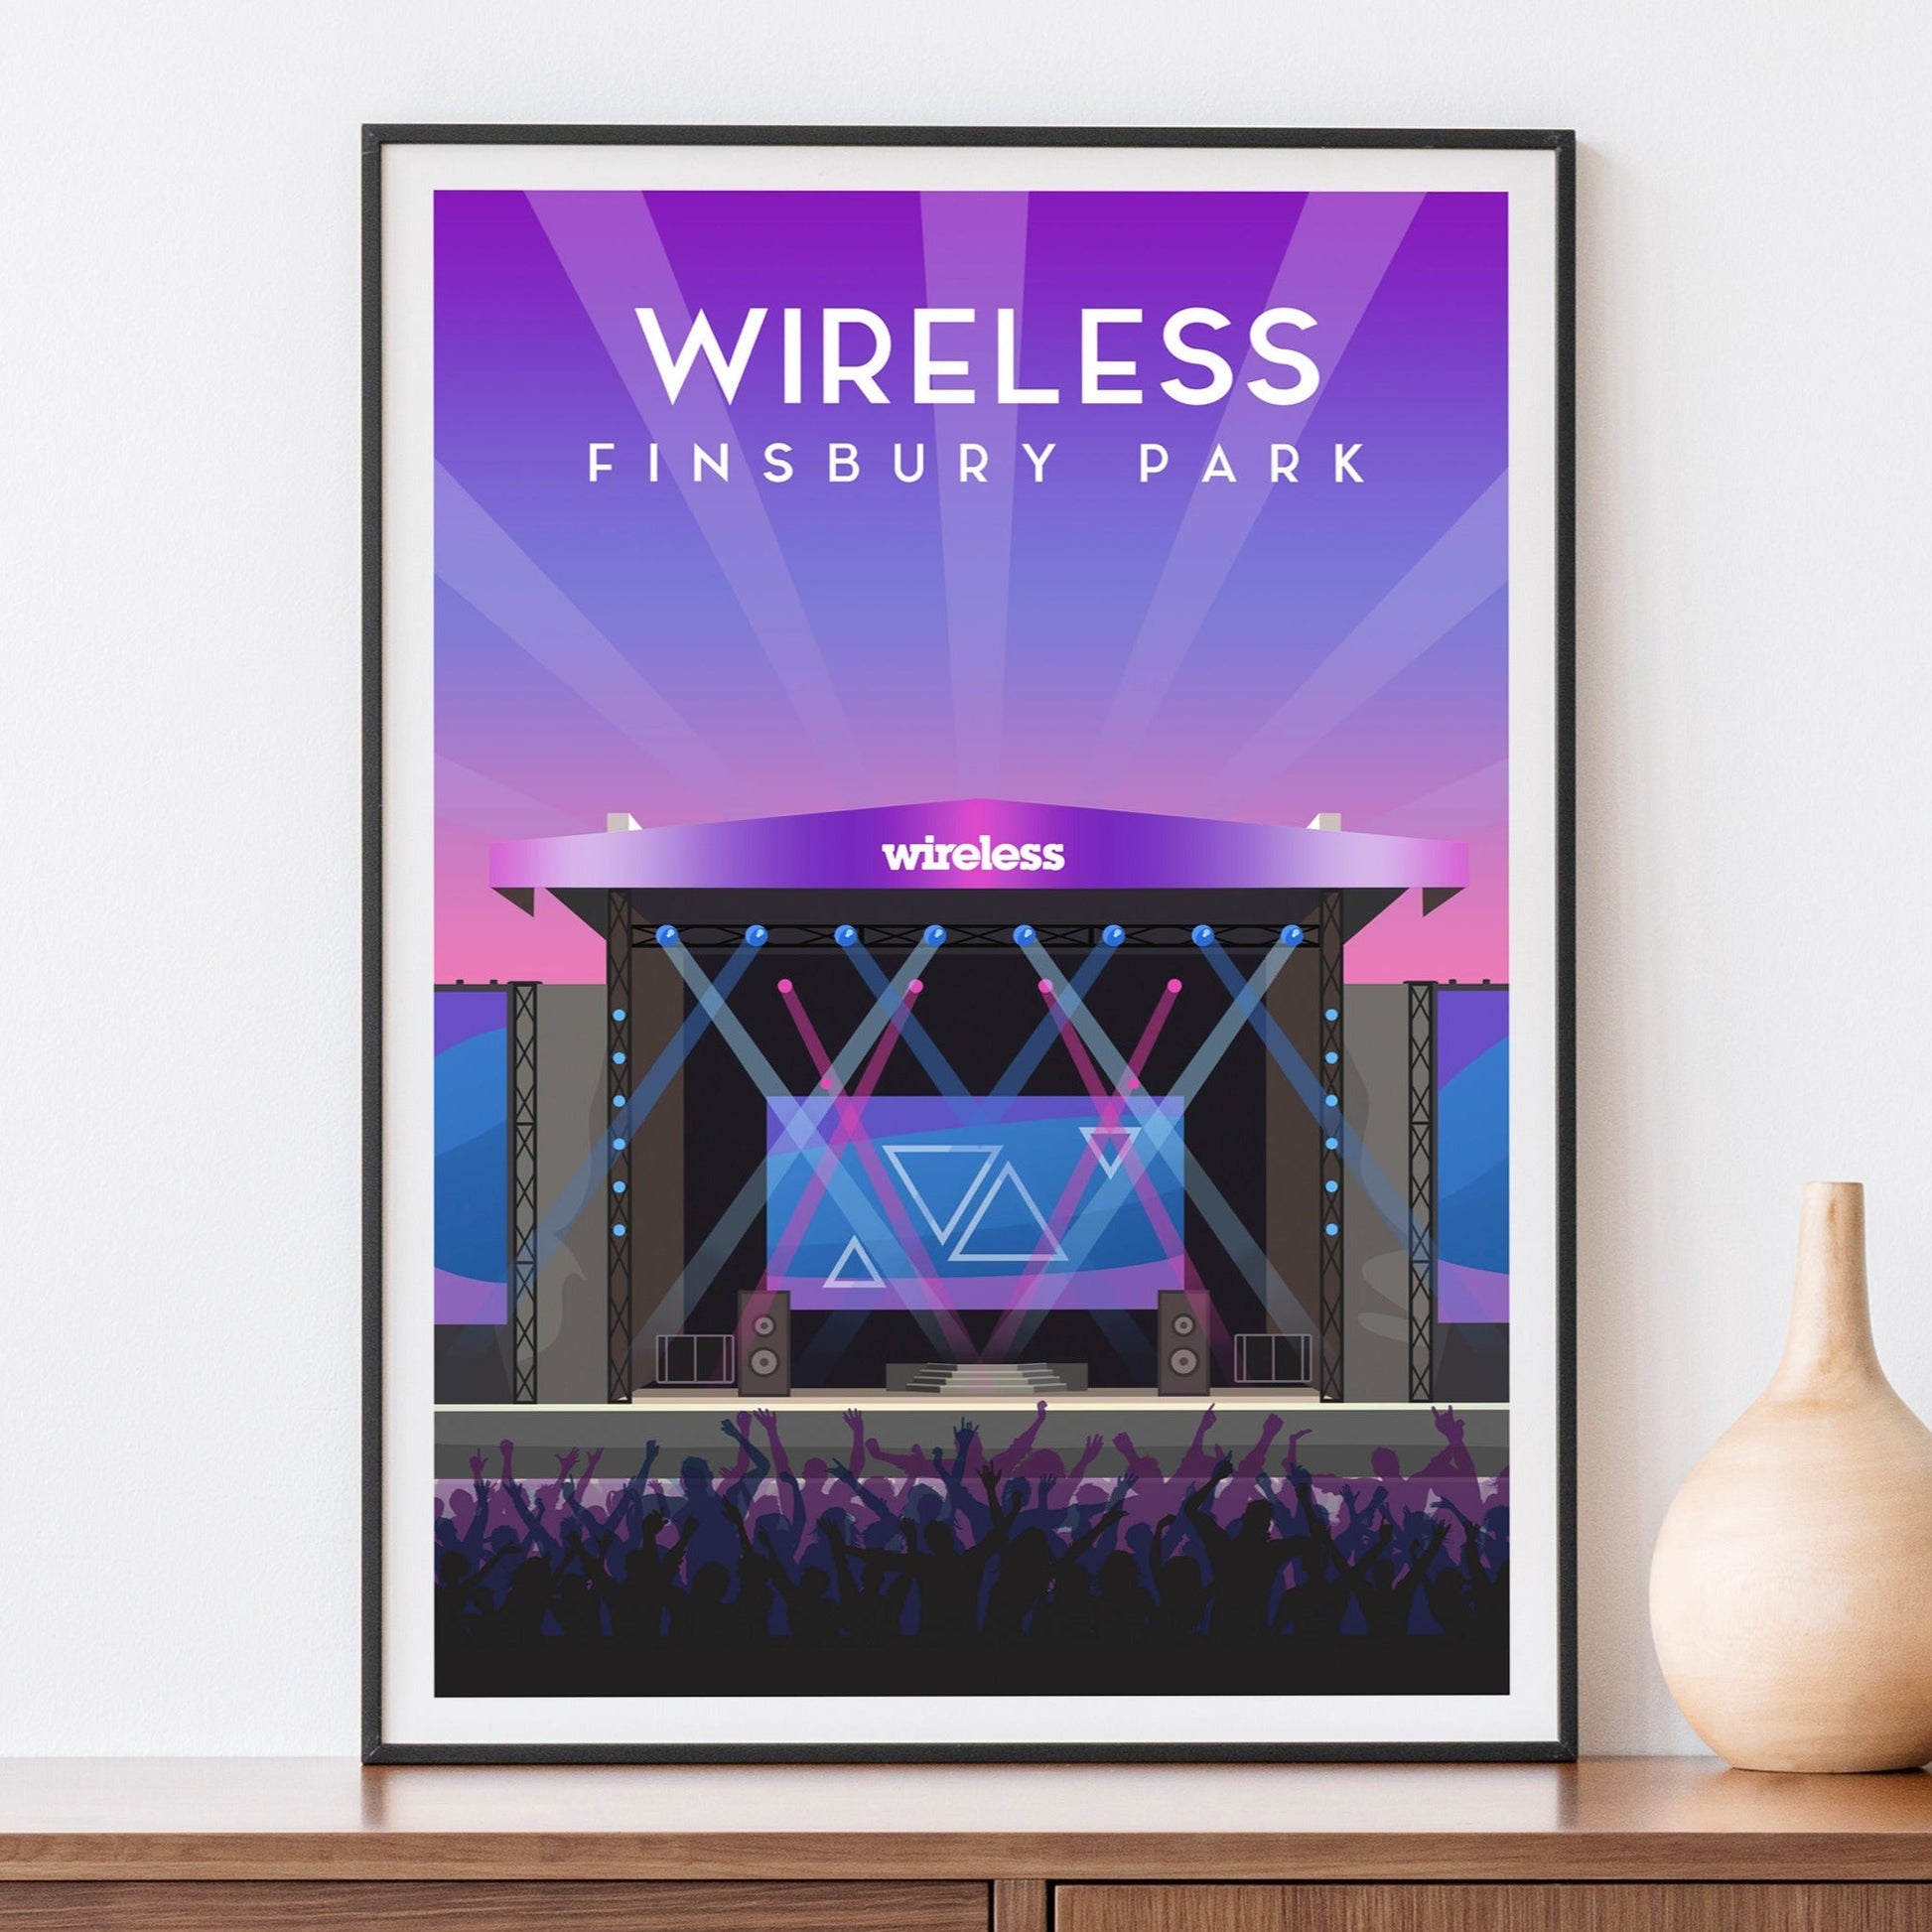 Wireless Festival Print, Finsbury Park London Wall Art Typelab